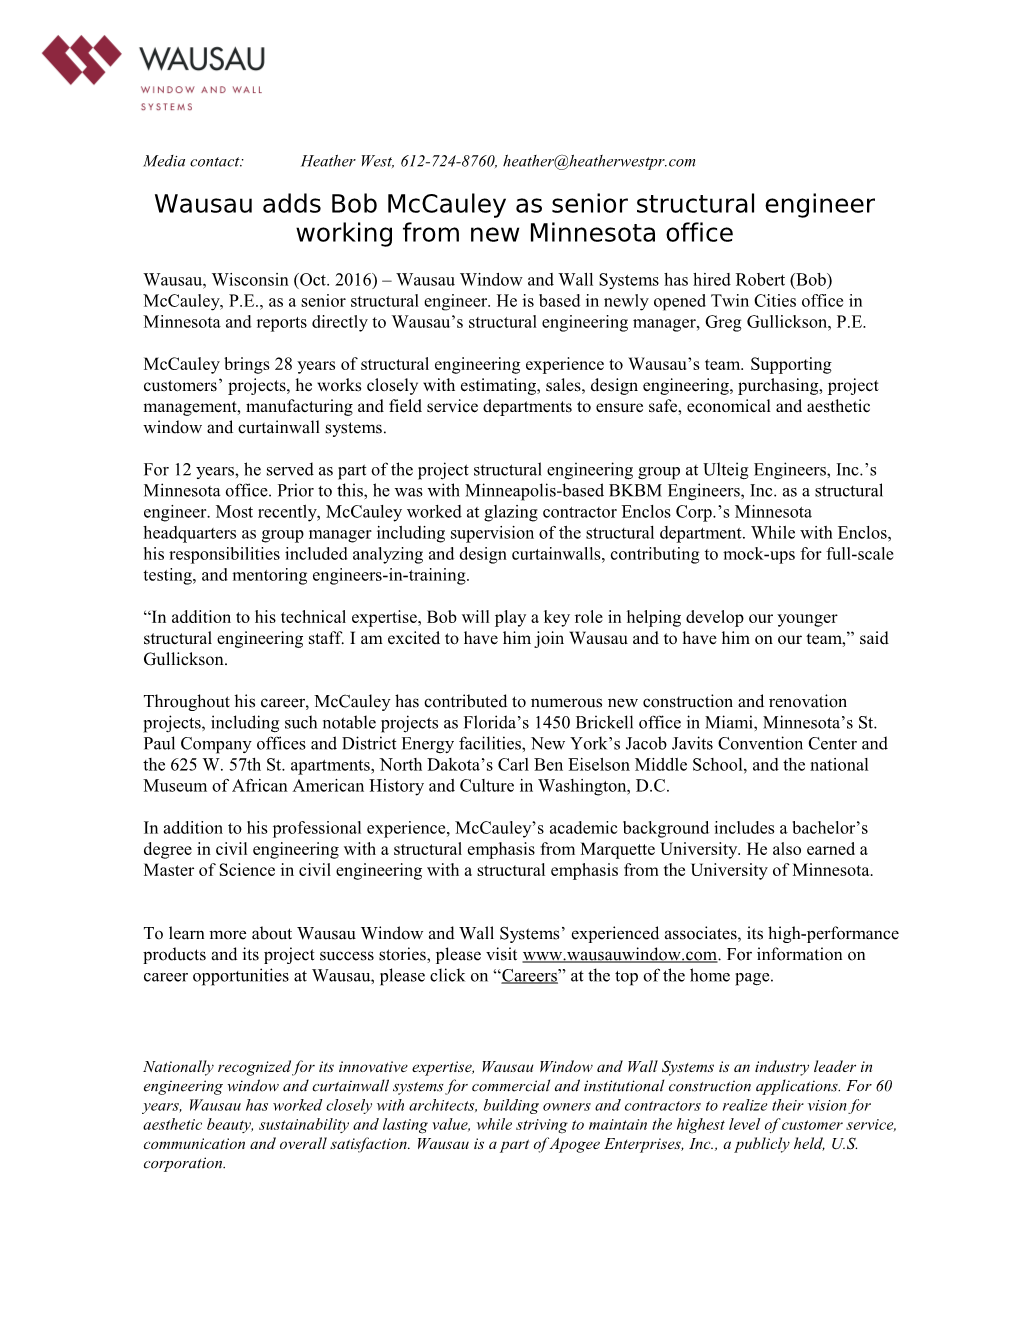 Wausau Adds Bob Mccauley As Senior Structural Engineer